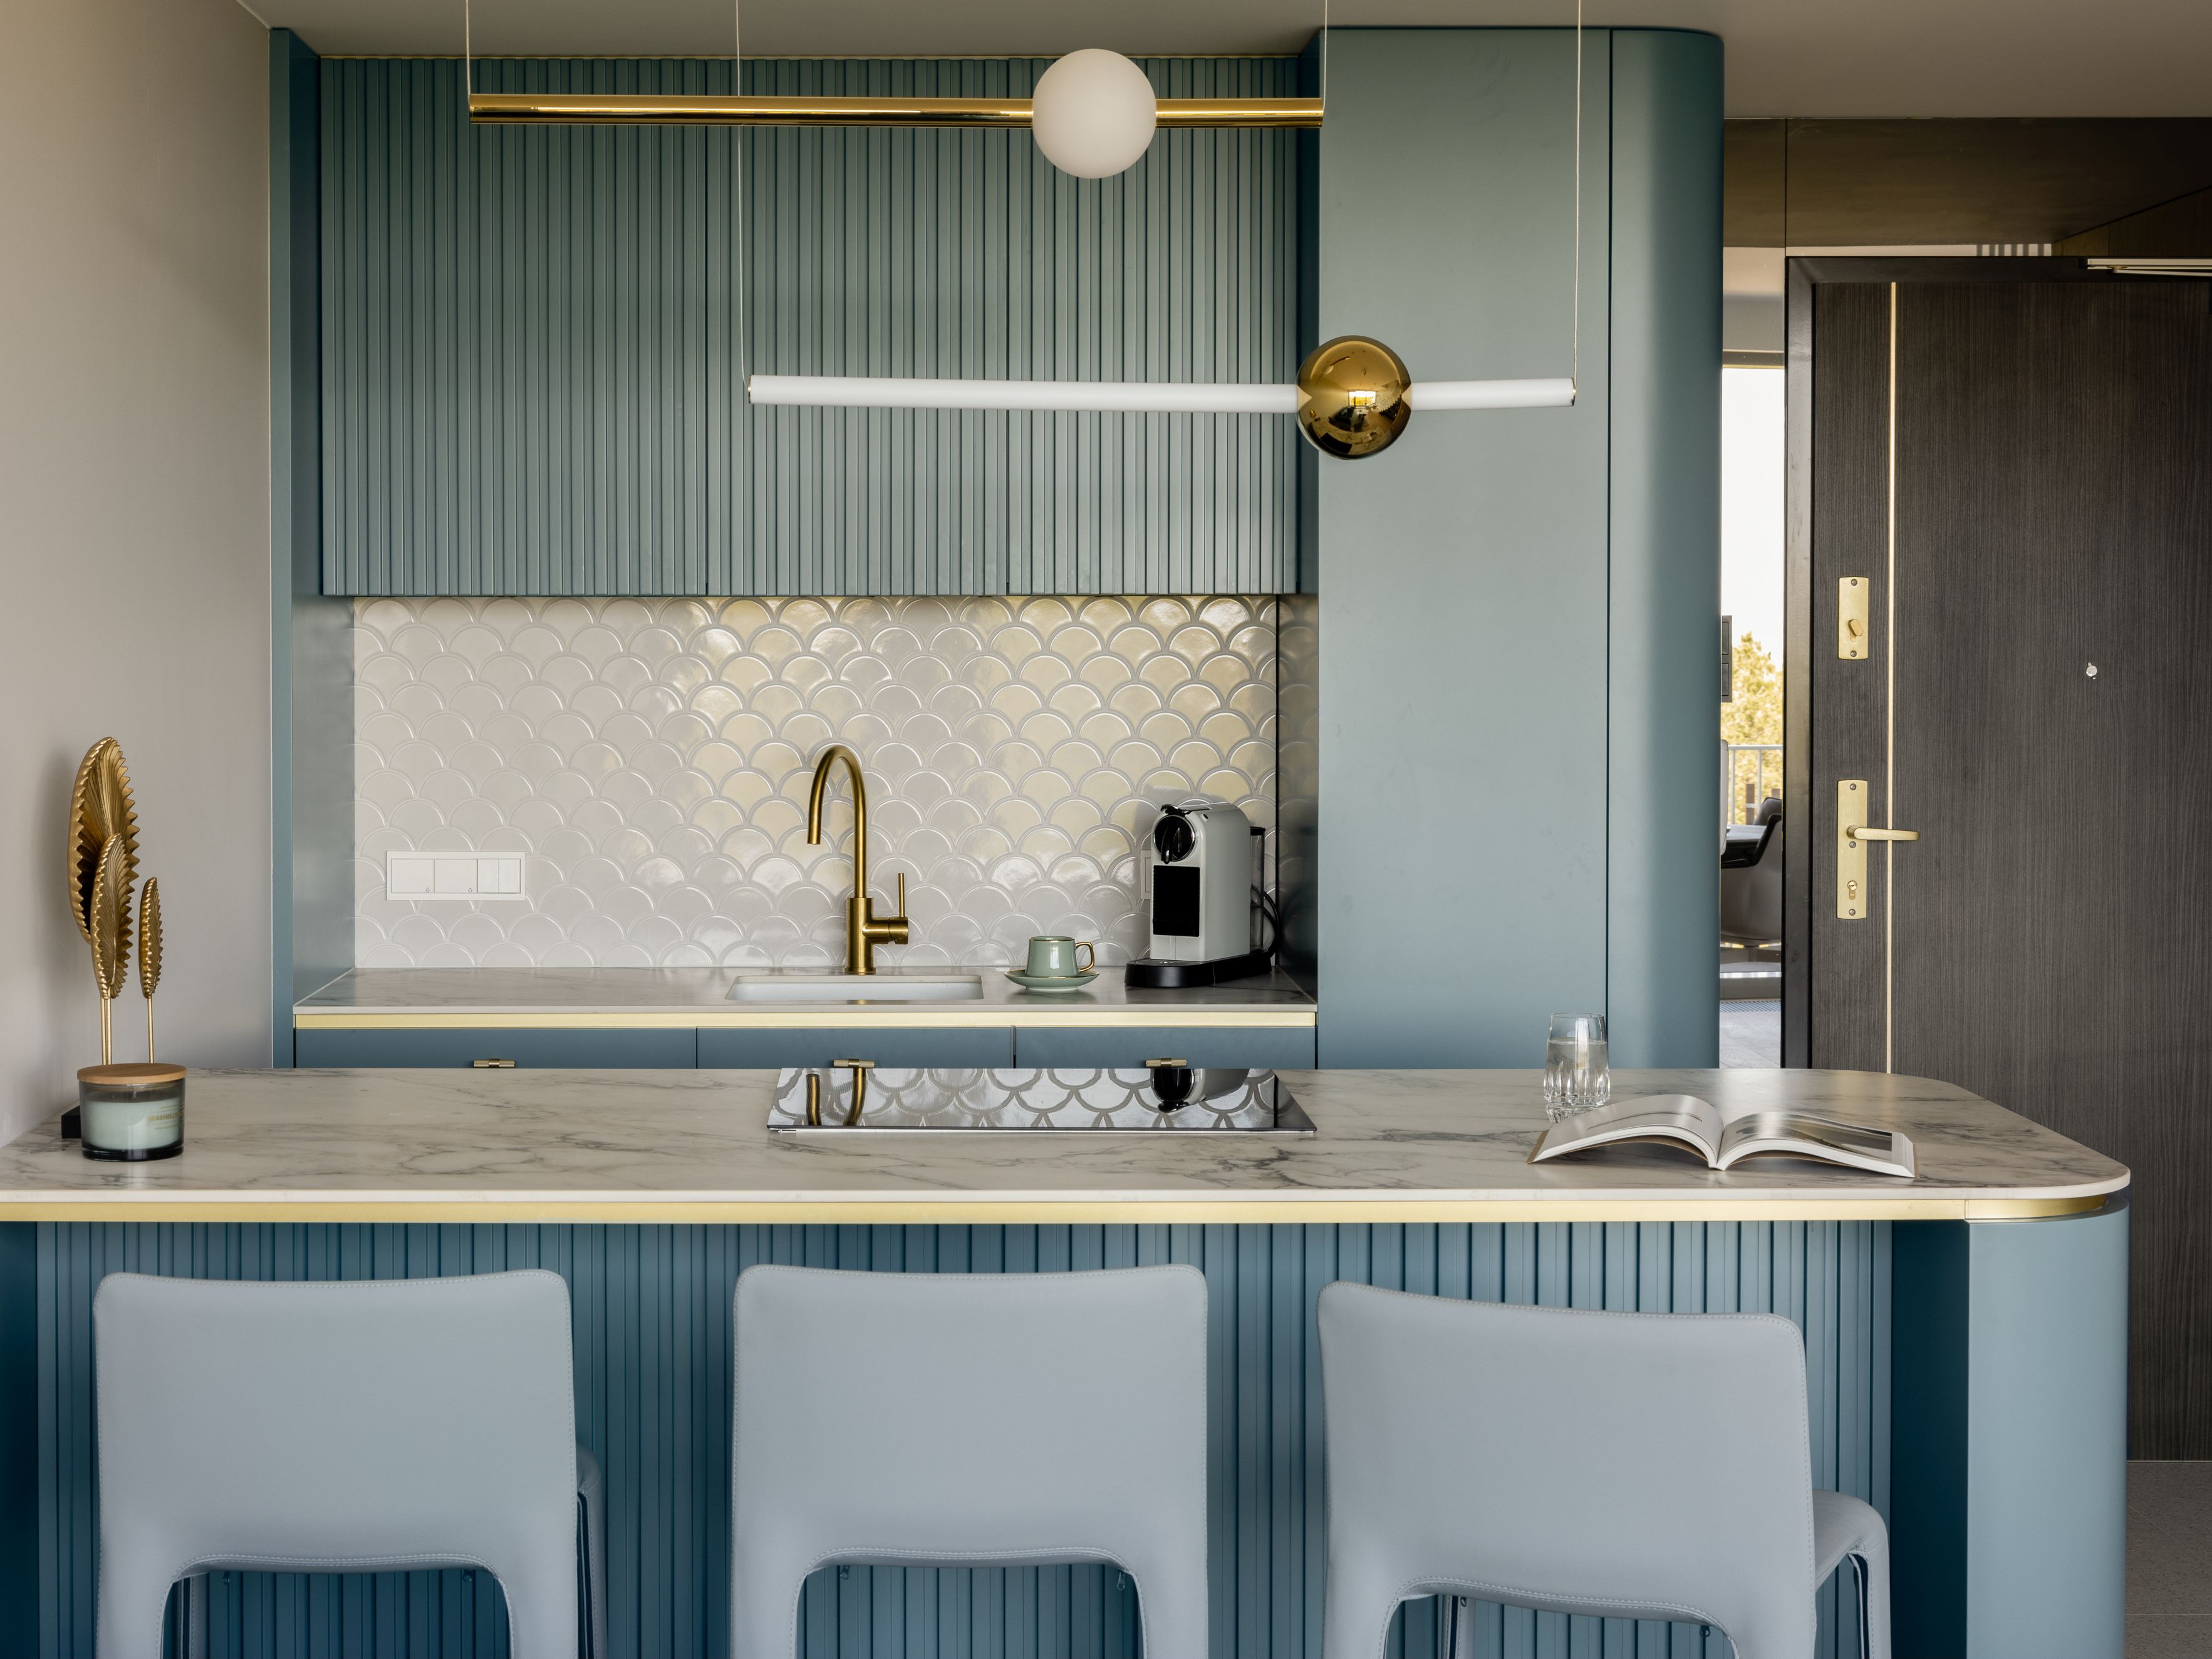 Mała błękitna kuchnia w mieszkaniu 70 metrów. Projekt wnętrza Soul Interiors. Fot. Ayuko Studio